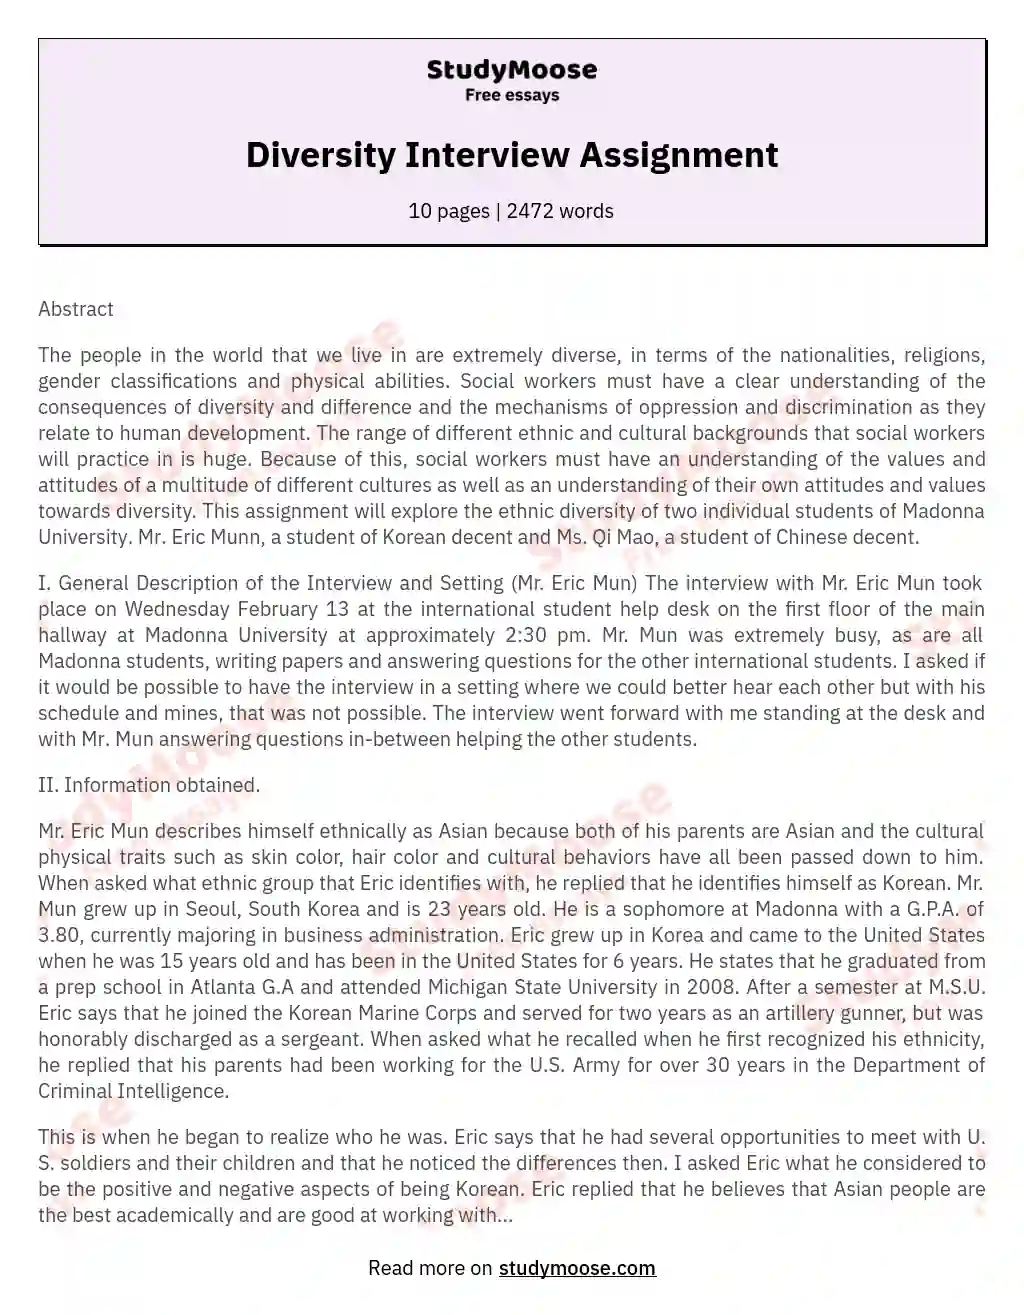 Diversity Interview Assignment essay